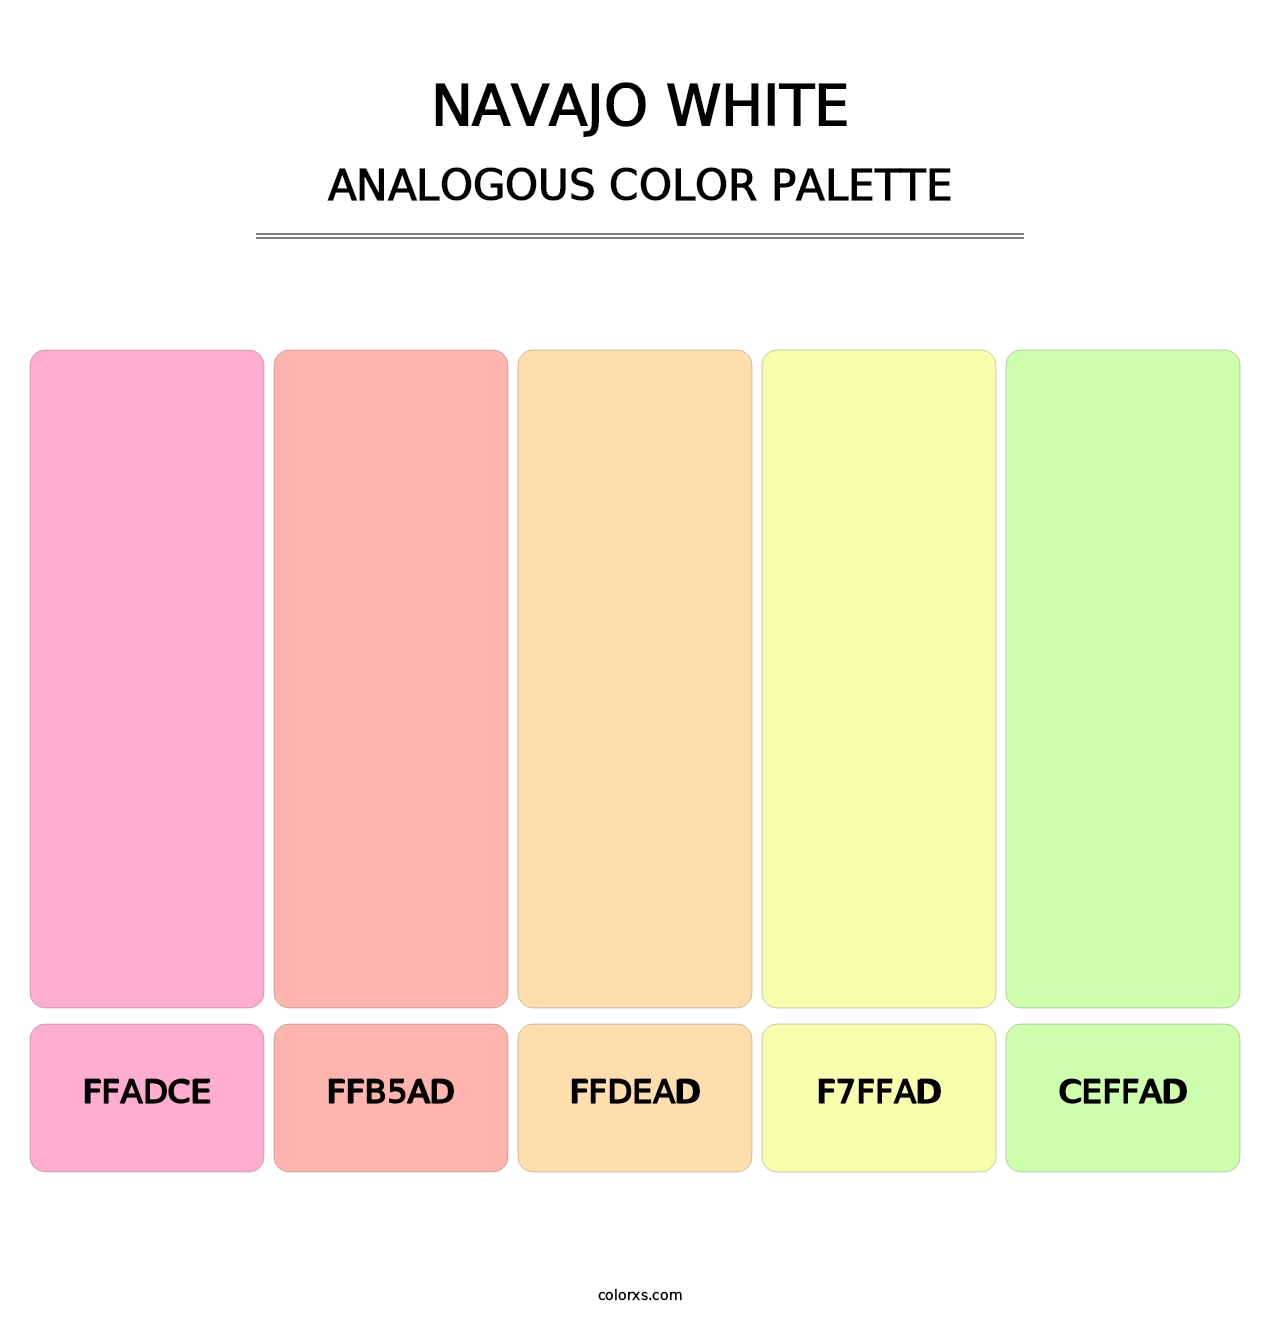 Navajo White - Analogous Color Palette